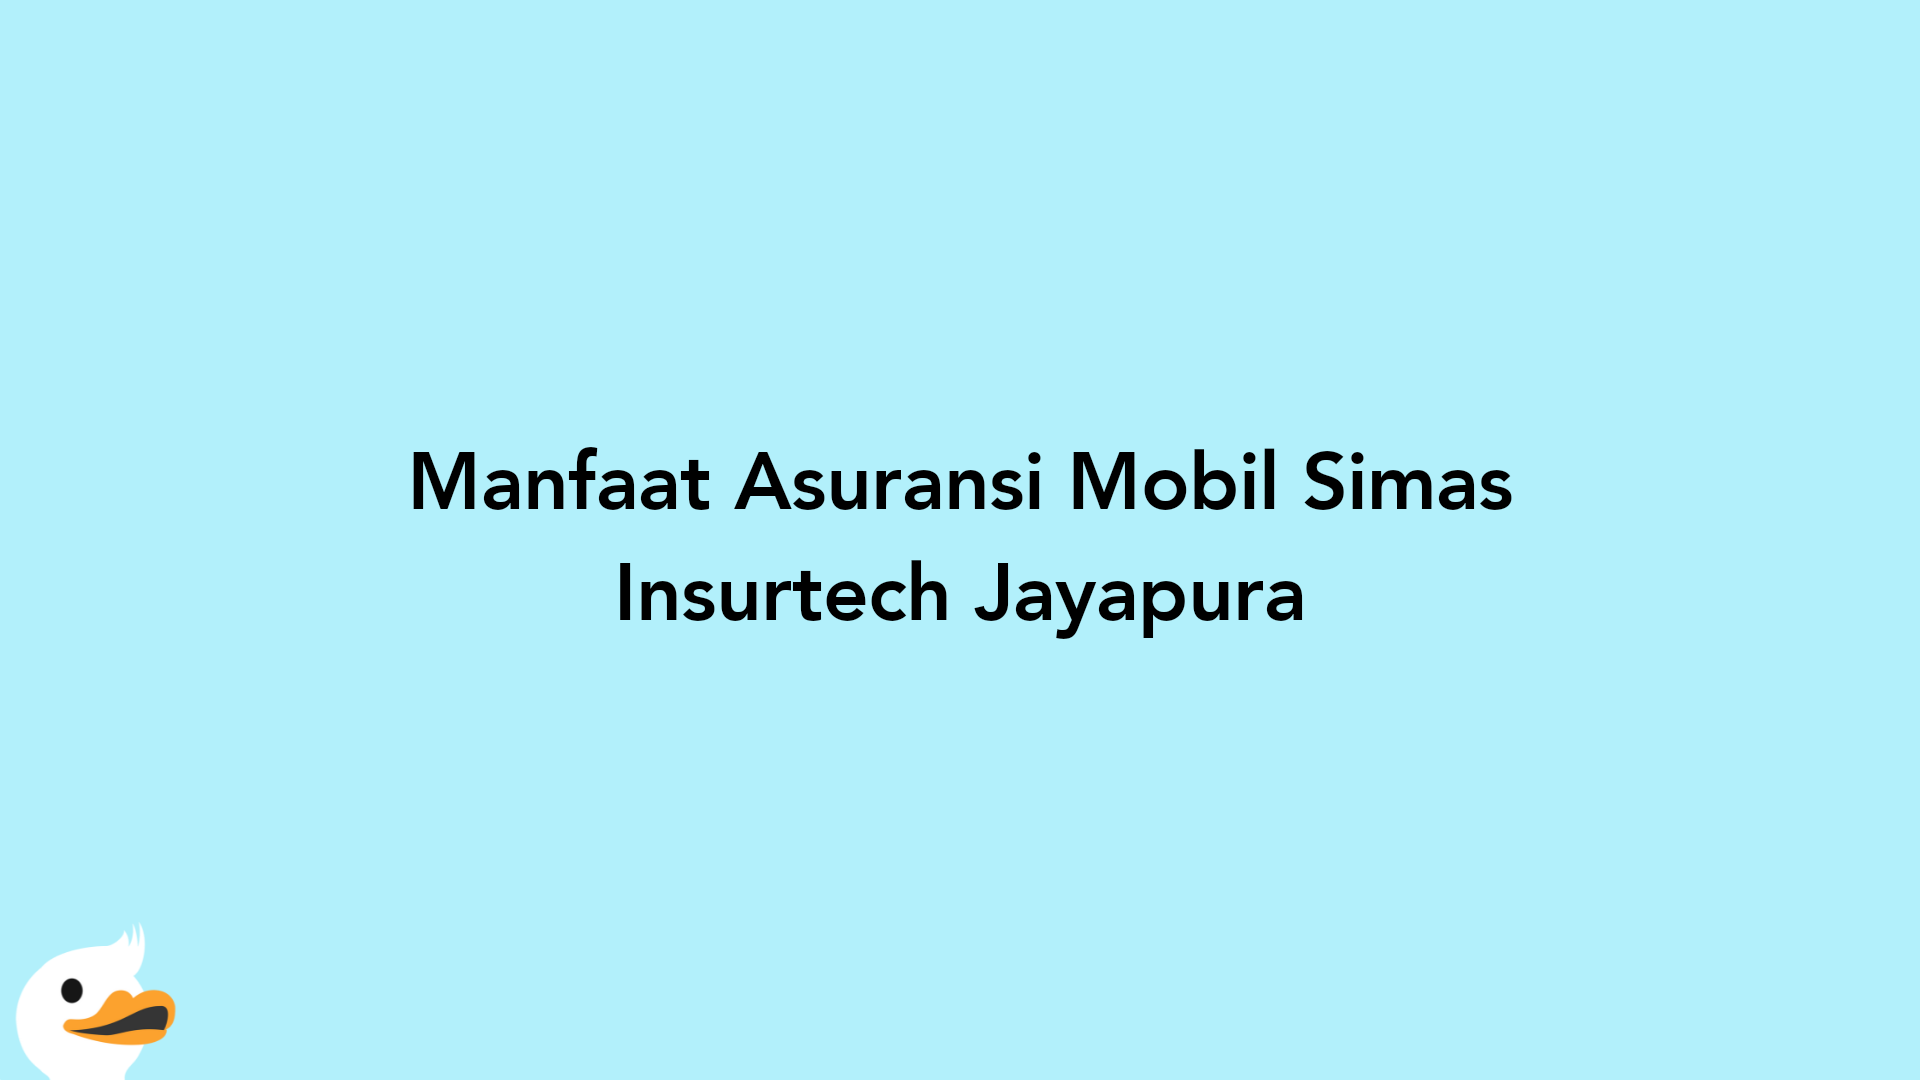 Manfaat Asuransi Mobil Simas Insurtech Jayapura